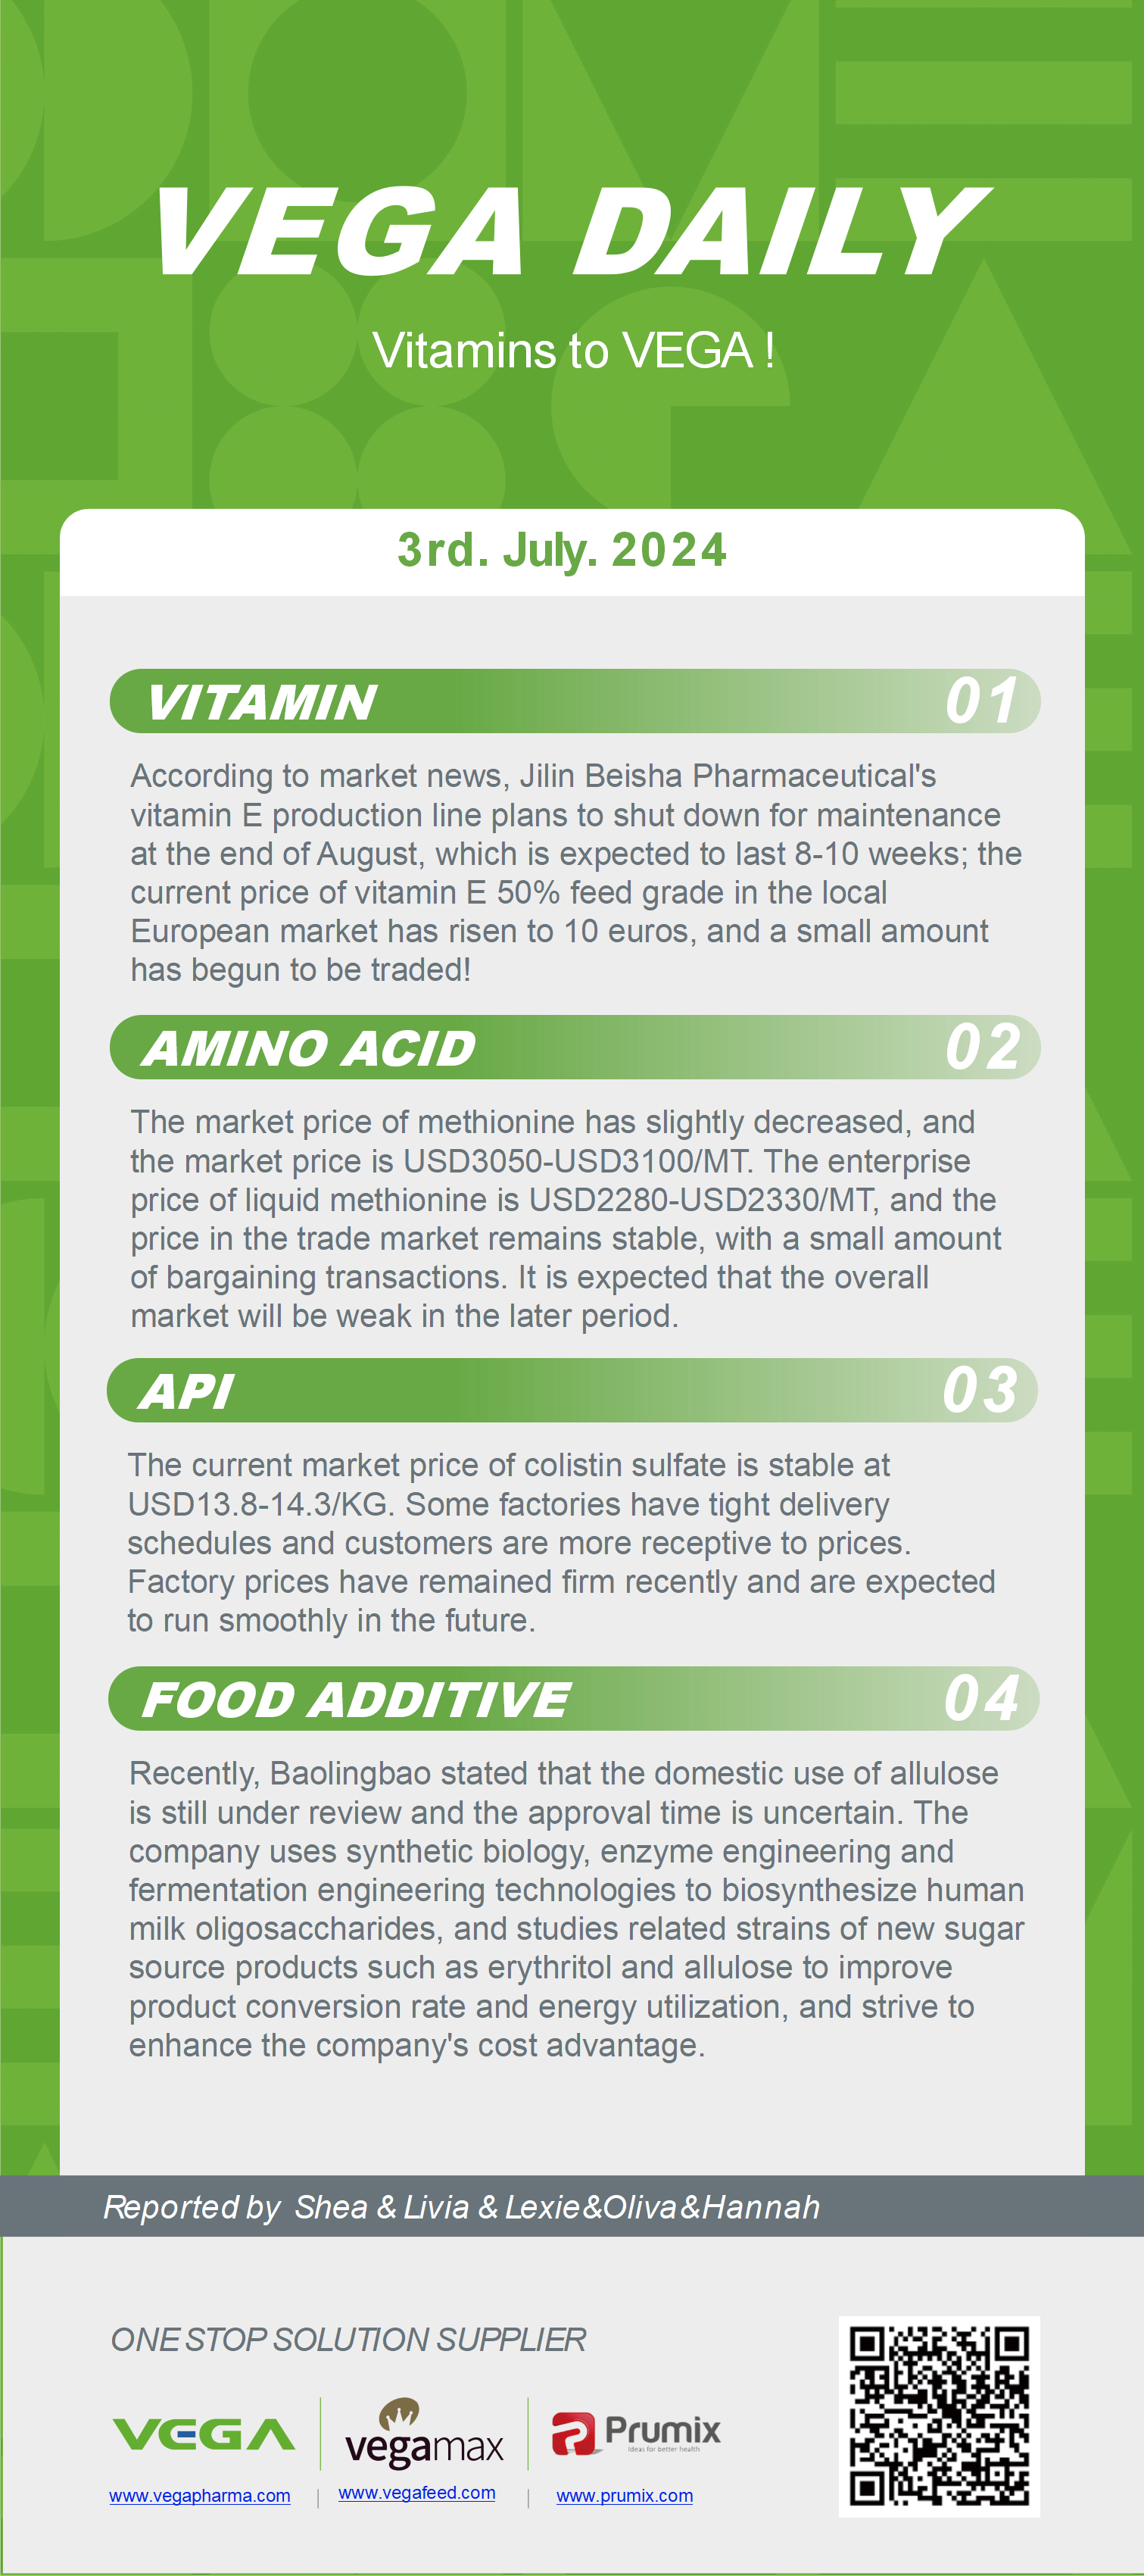 Vega Daily Dated on Jul 3rd 2024 Vitamin Amino Acid APl Food Additives.png